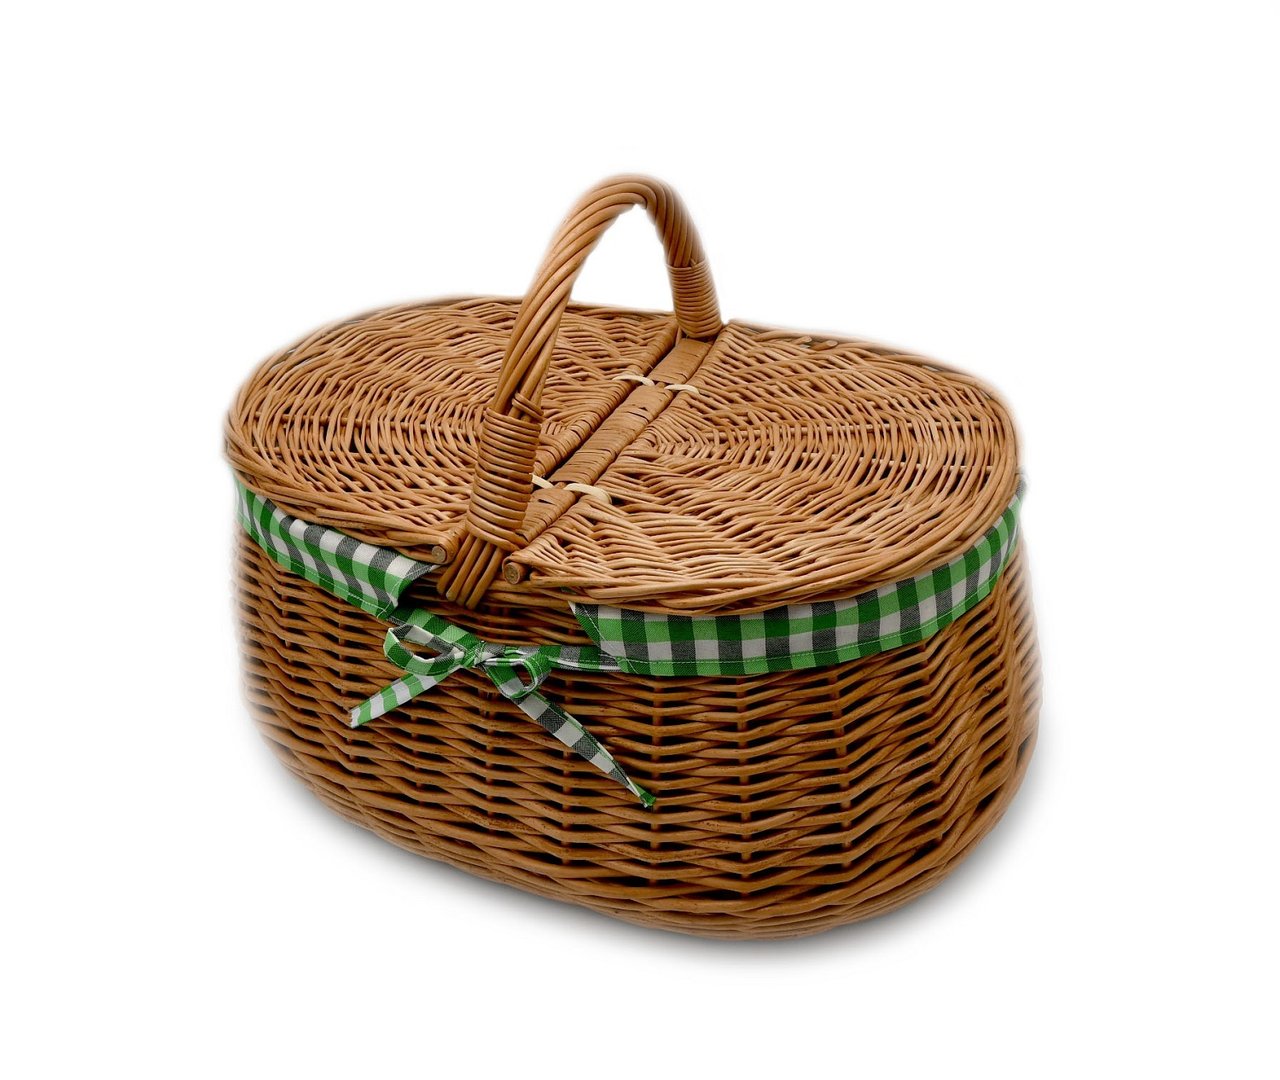 Myber ® Wicker Shopping Basket Carrying Basket Wicker Brown Round Fabric K1-001 sbrw 